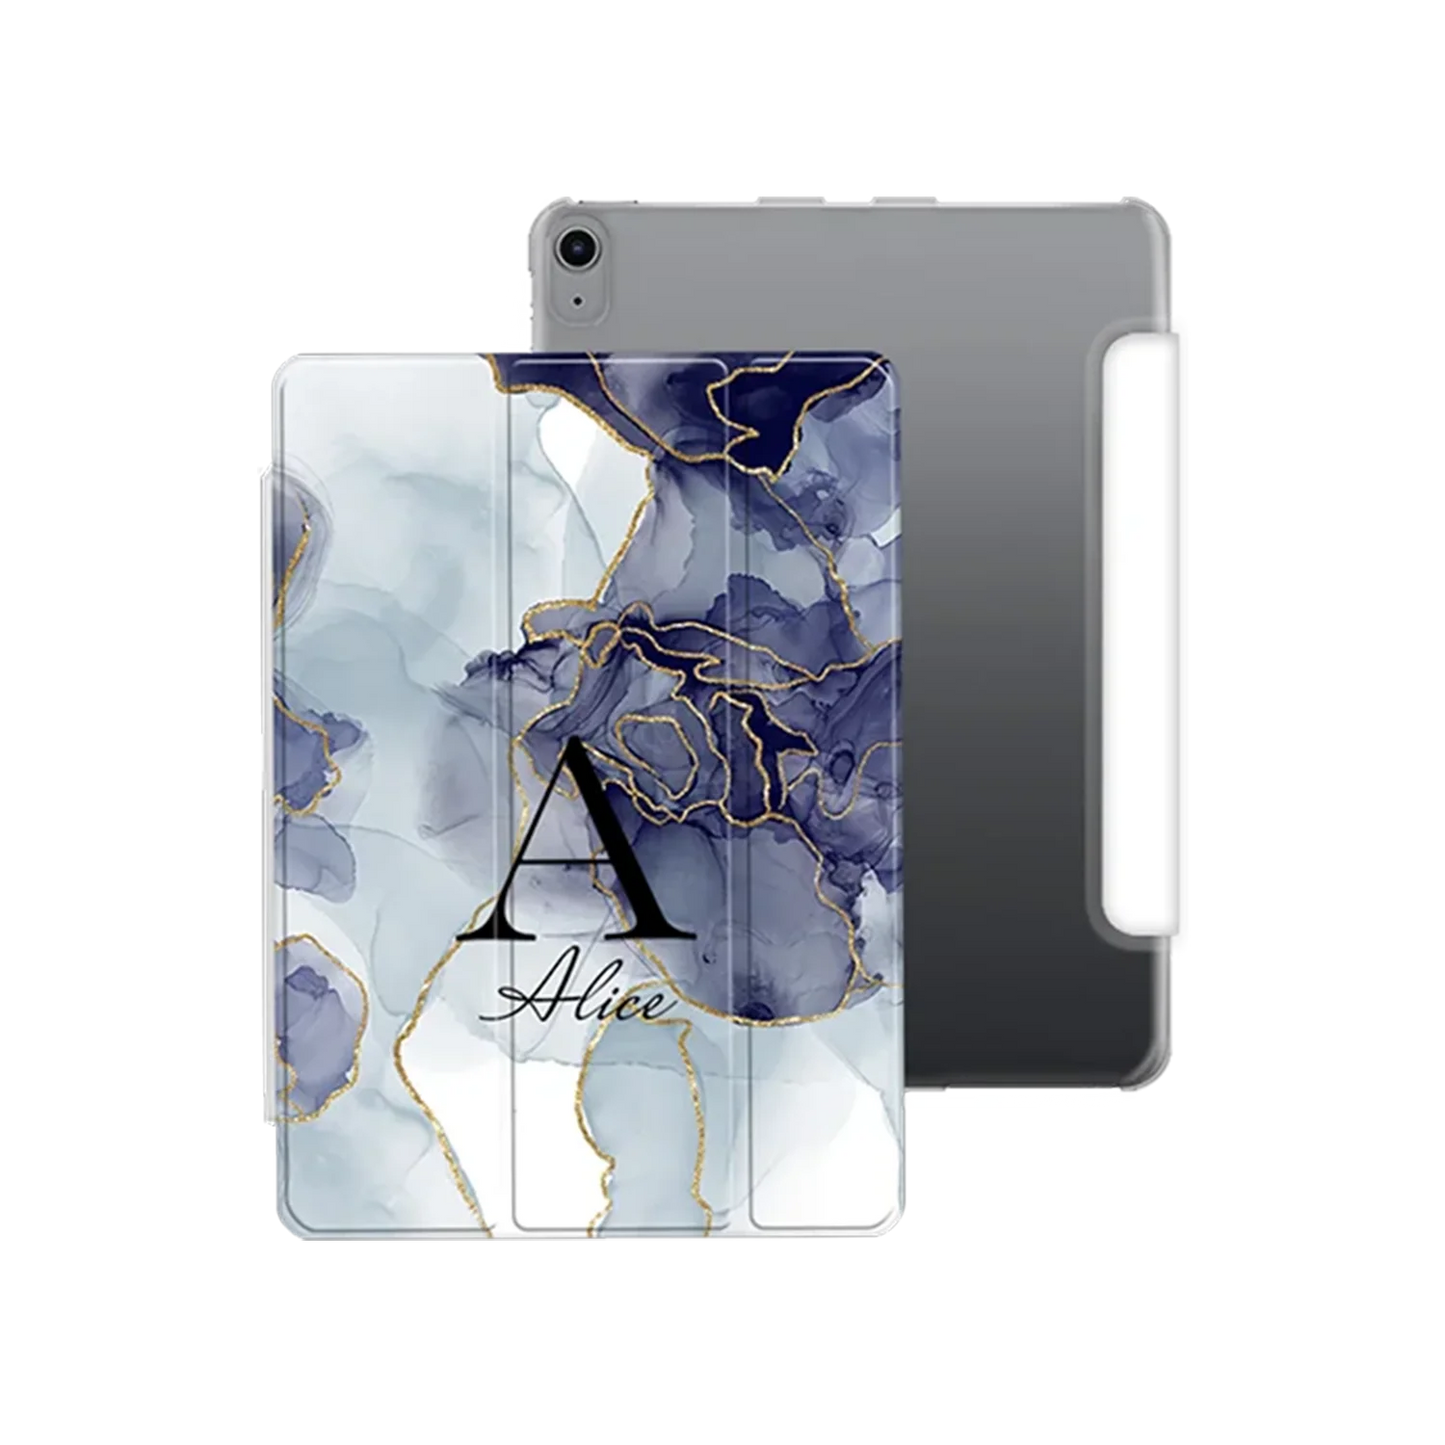 Marble Dream - Custom iPad Case